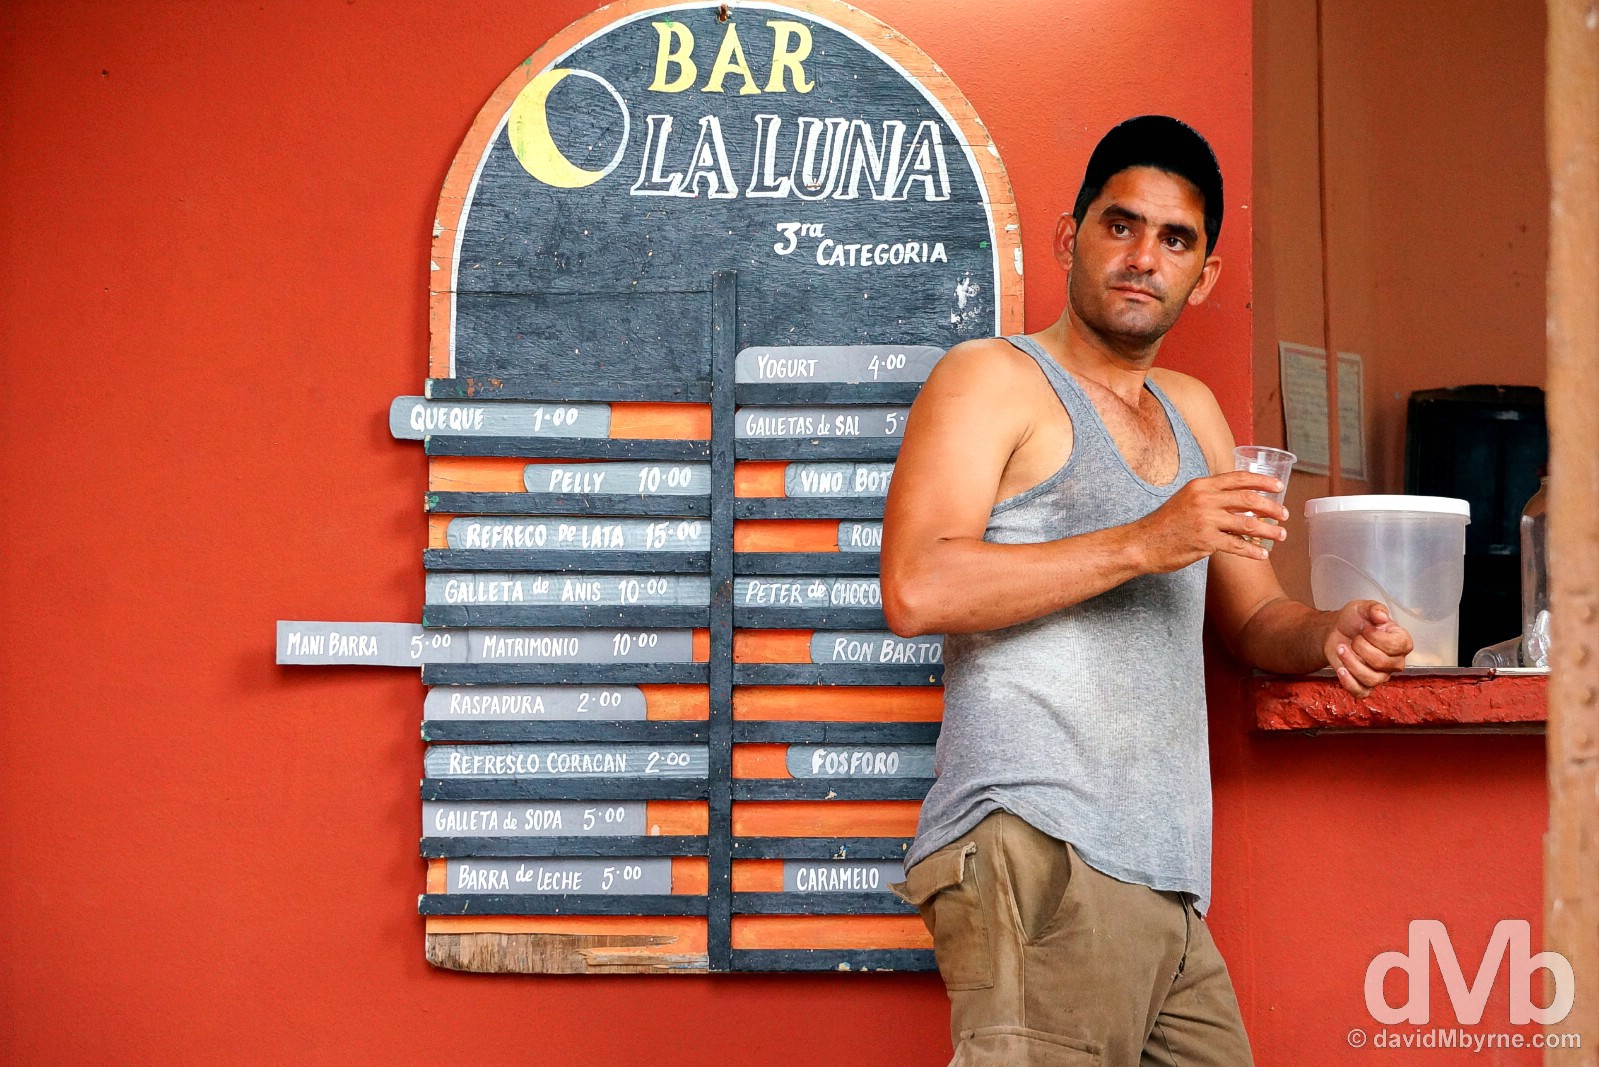 Bar La Luna, Trinidad, Cuba. May 5, 2015.